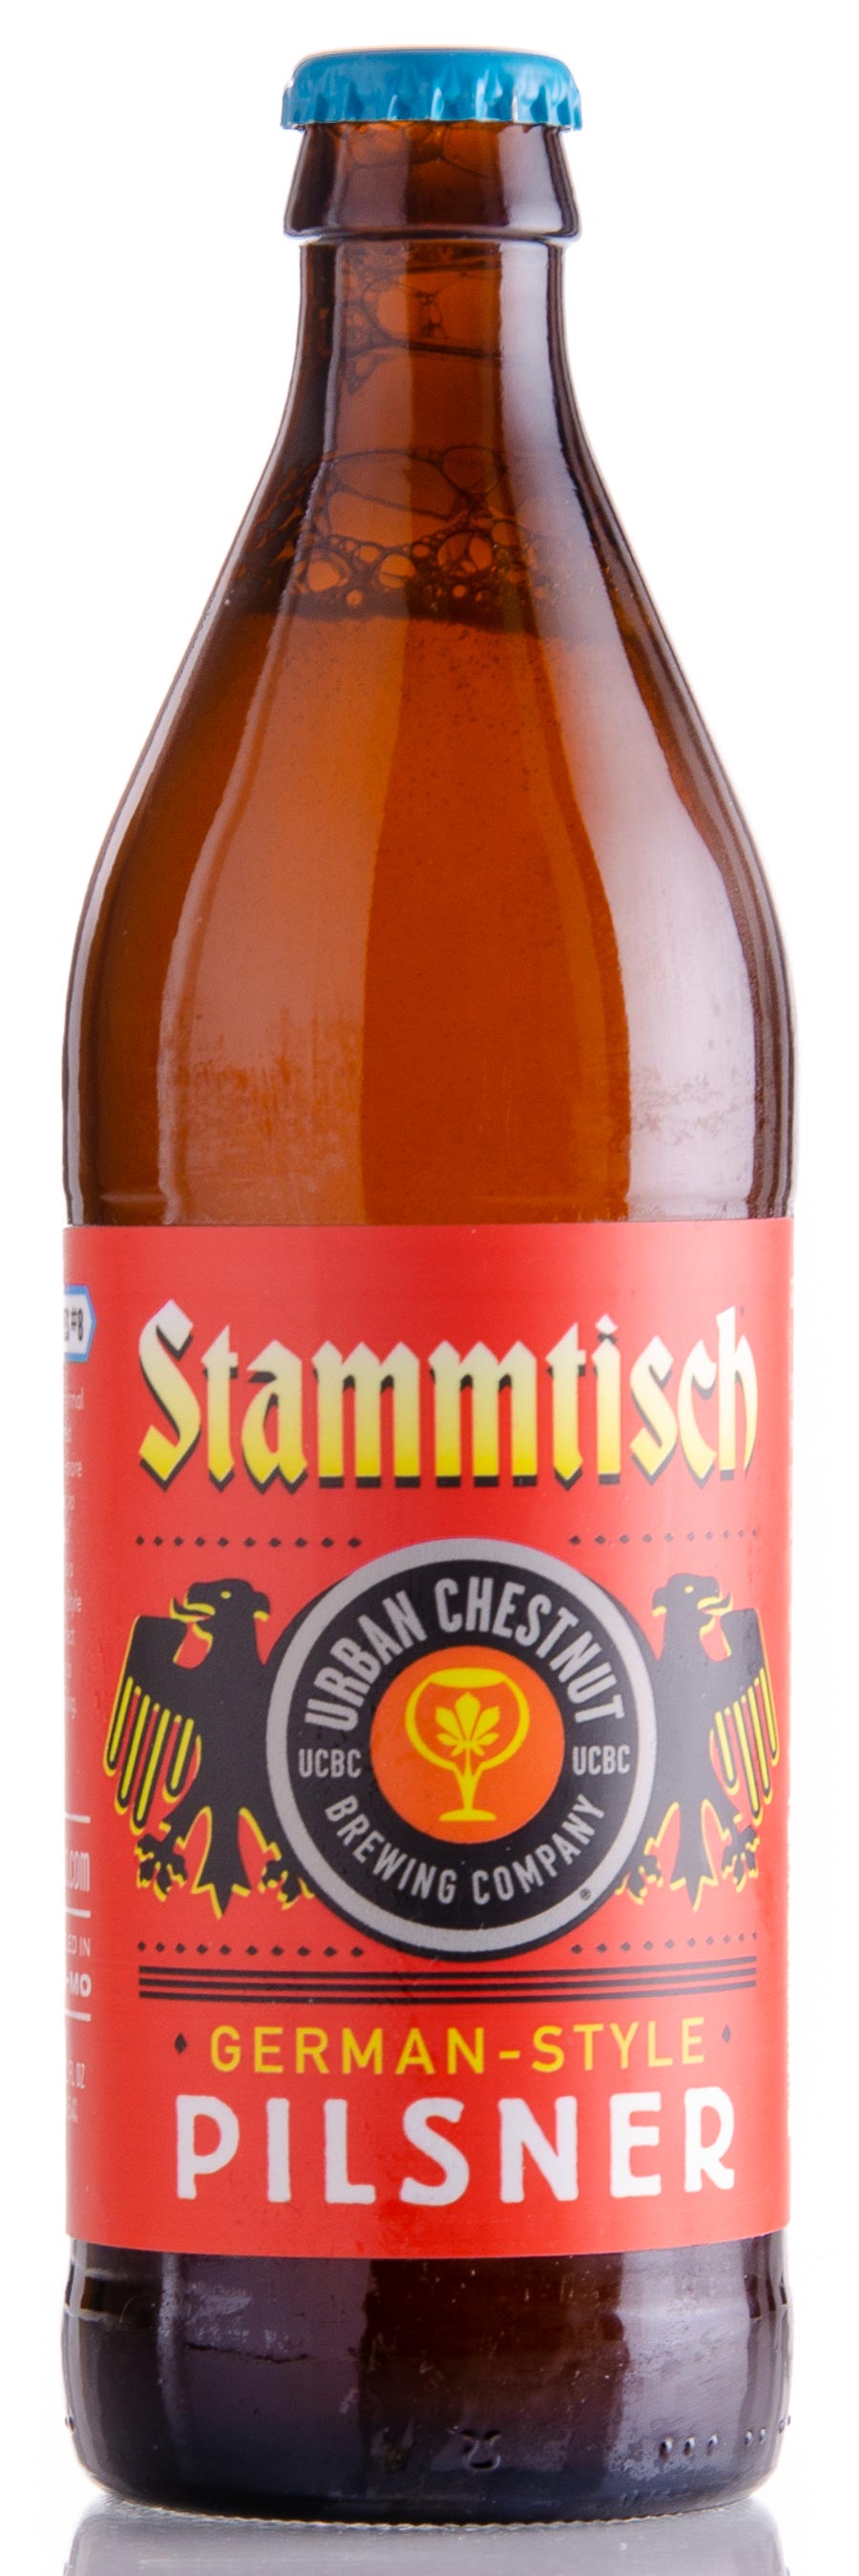 popular pilsner beer brands